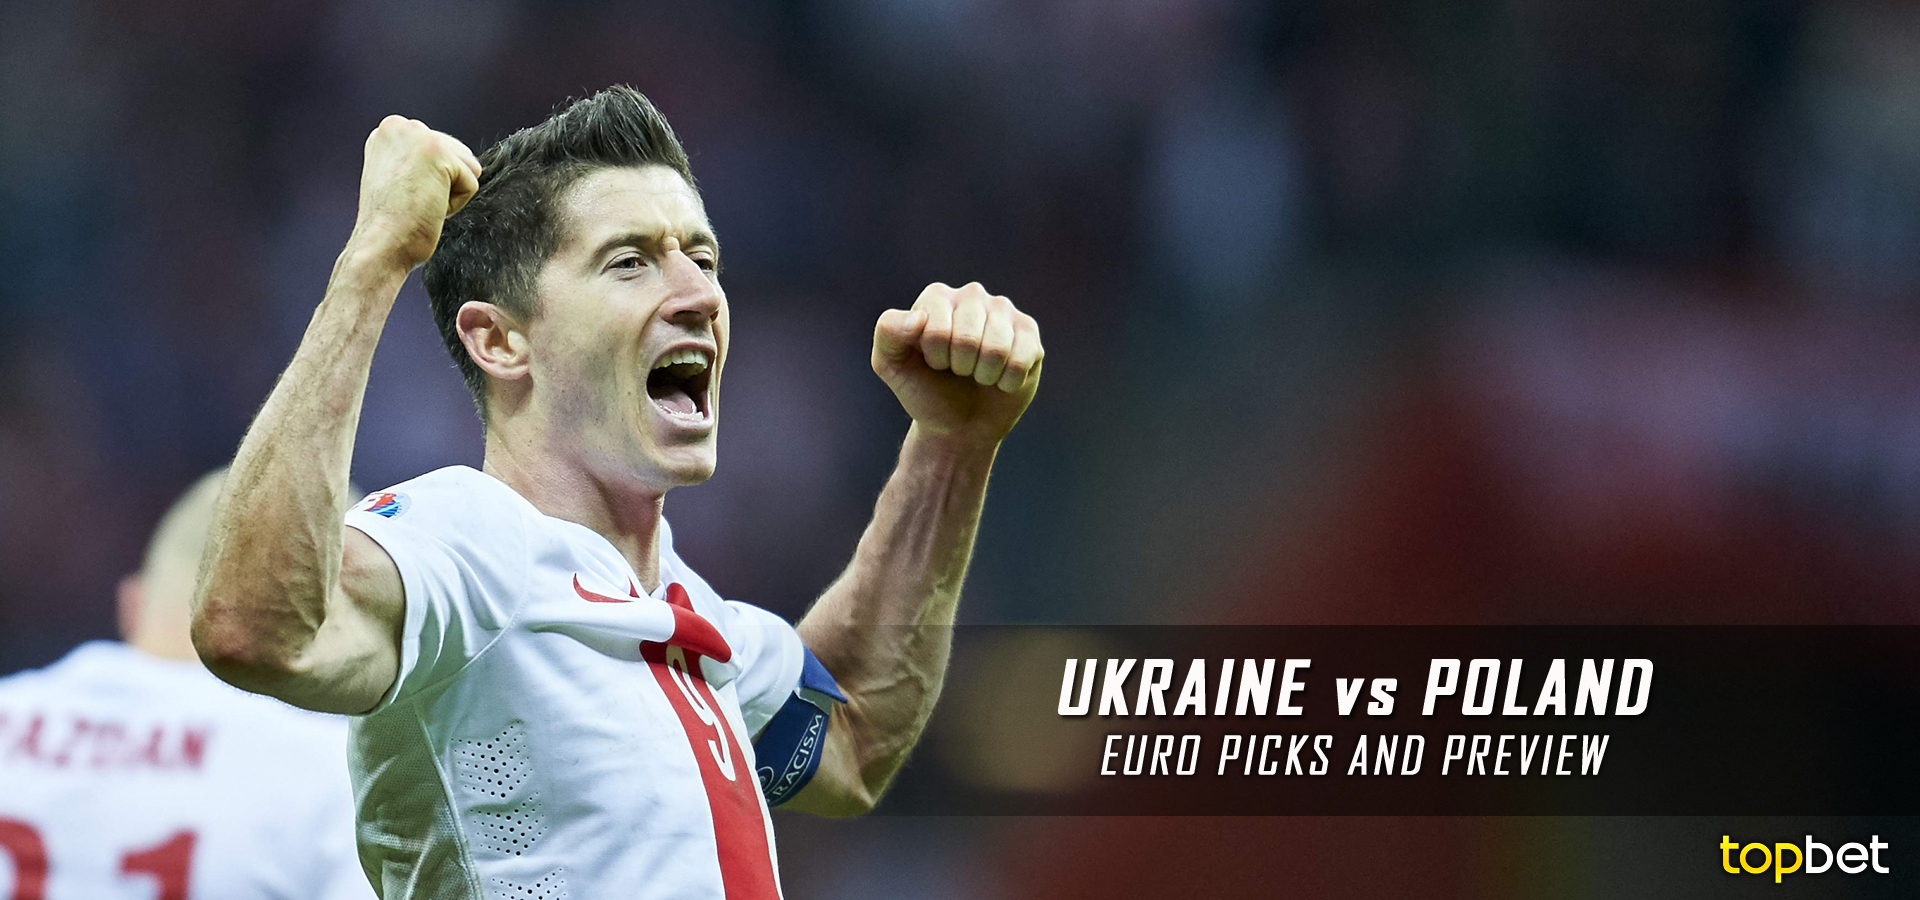 Ukraine vs Poland 2016 Euro Cup Group C Predictions / Picks1920 x 900